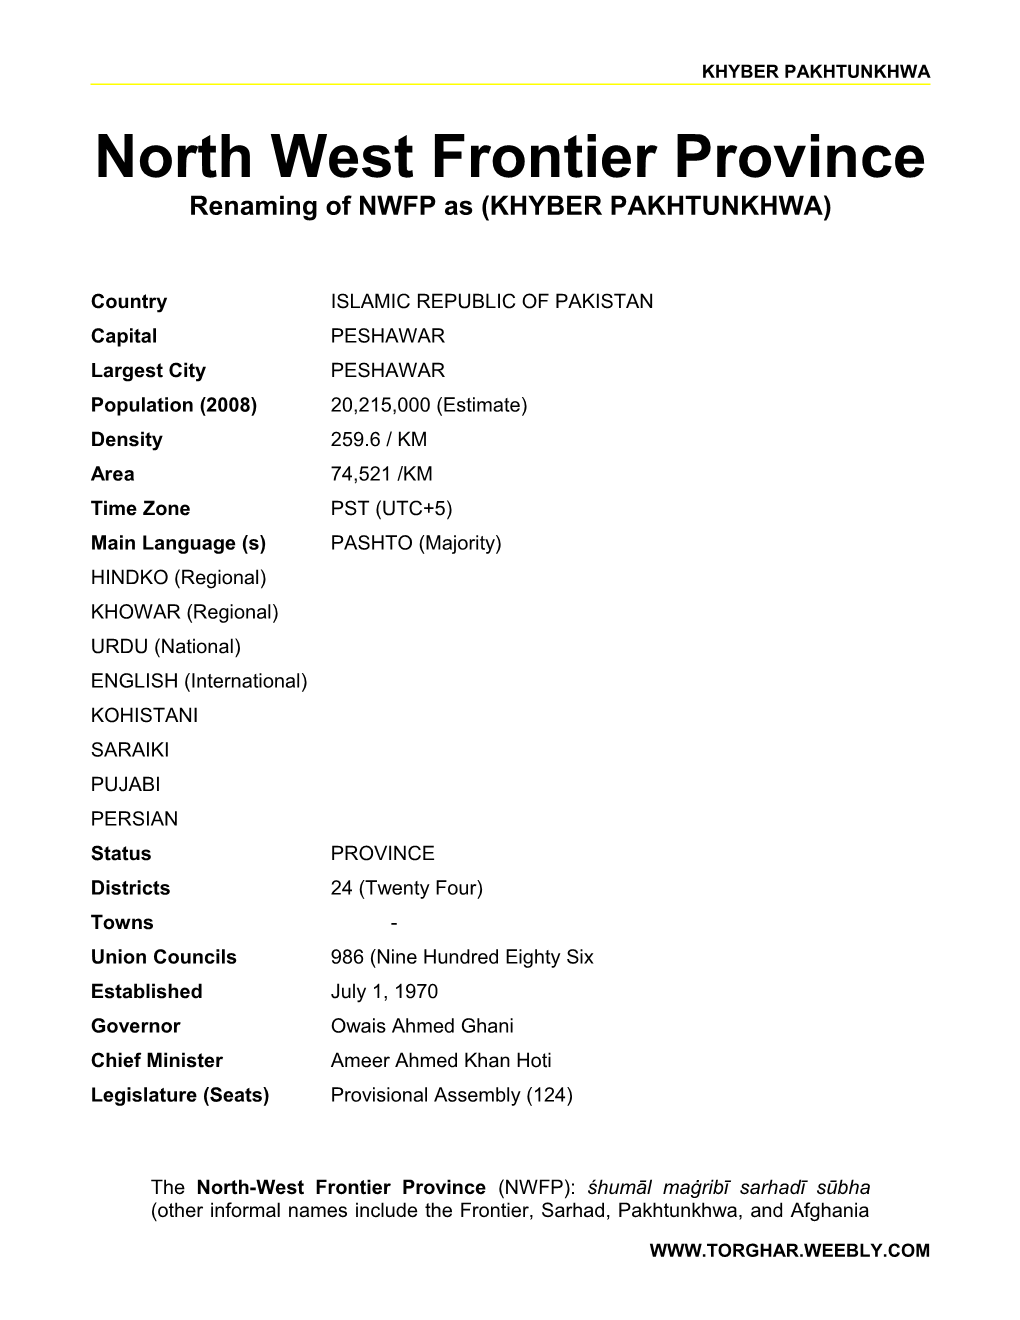 North West Frontier Province (Pakistan)